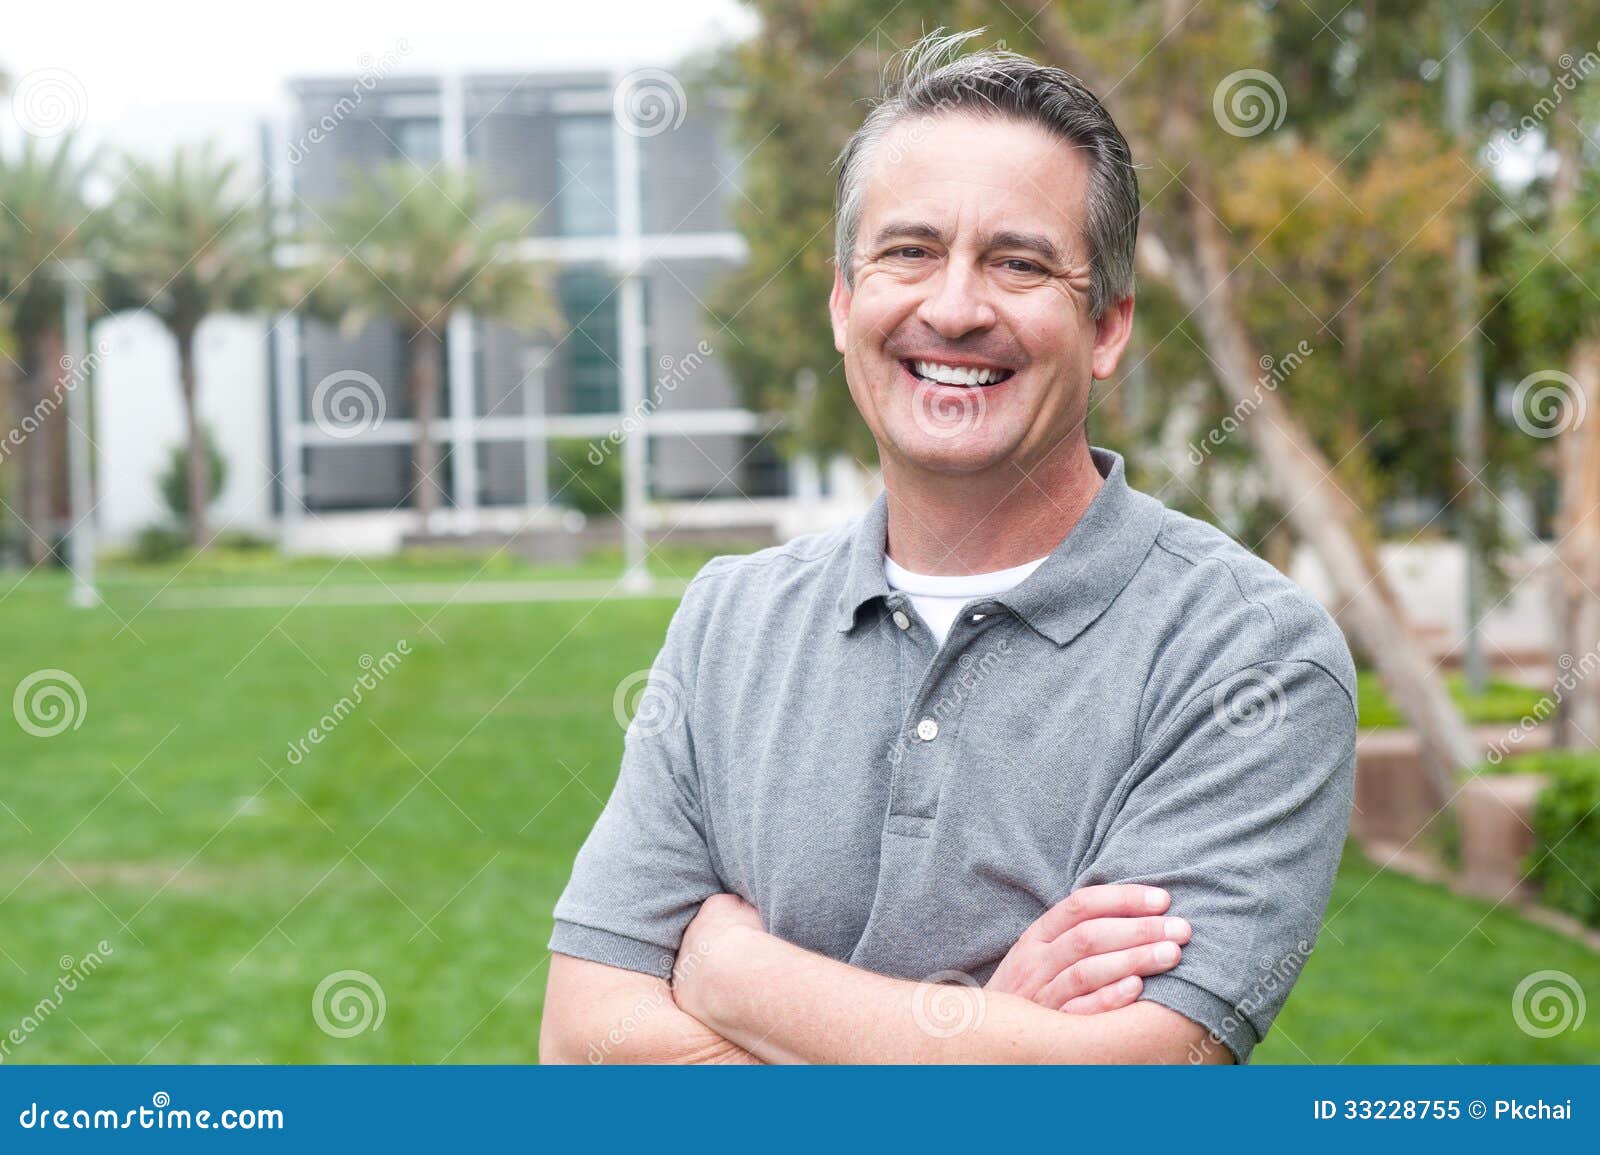 casual portrait of a mature, happy man